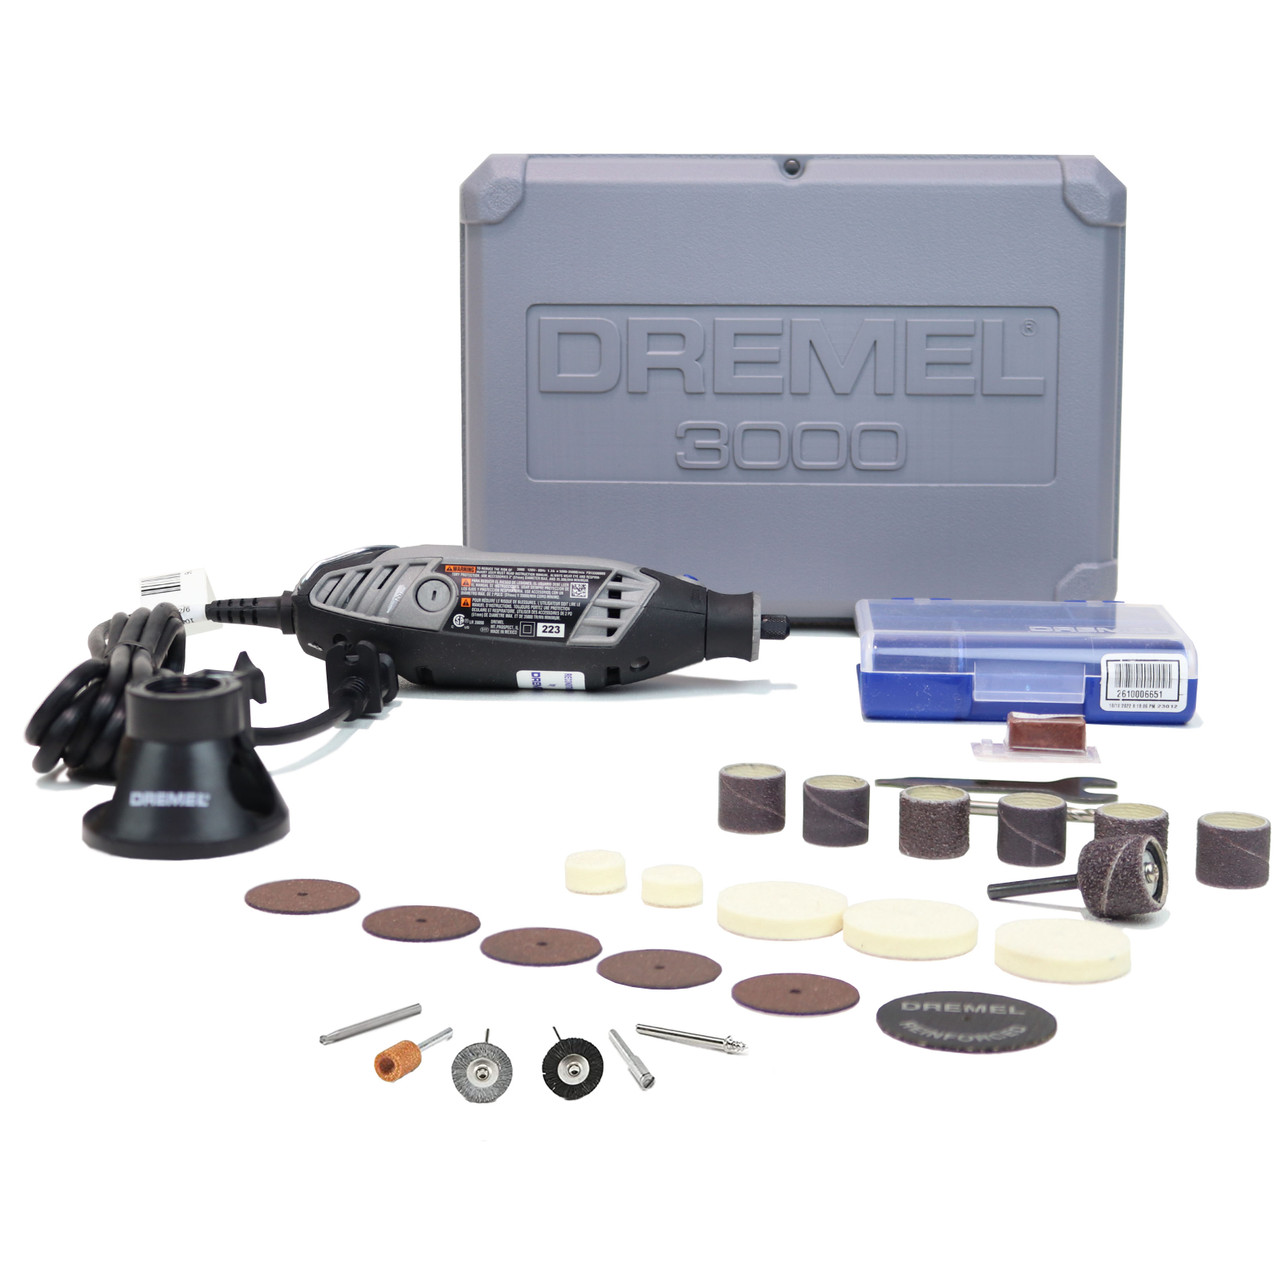 Dremel 3000 Value Pack Corded Rotary Tool Kit w/ Bonus 52 Piece Accessories